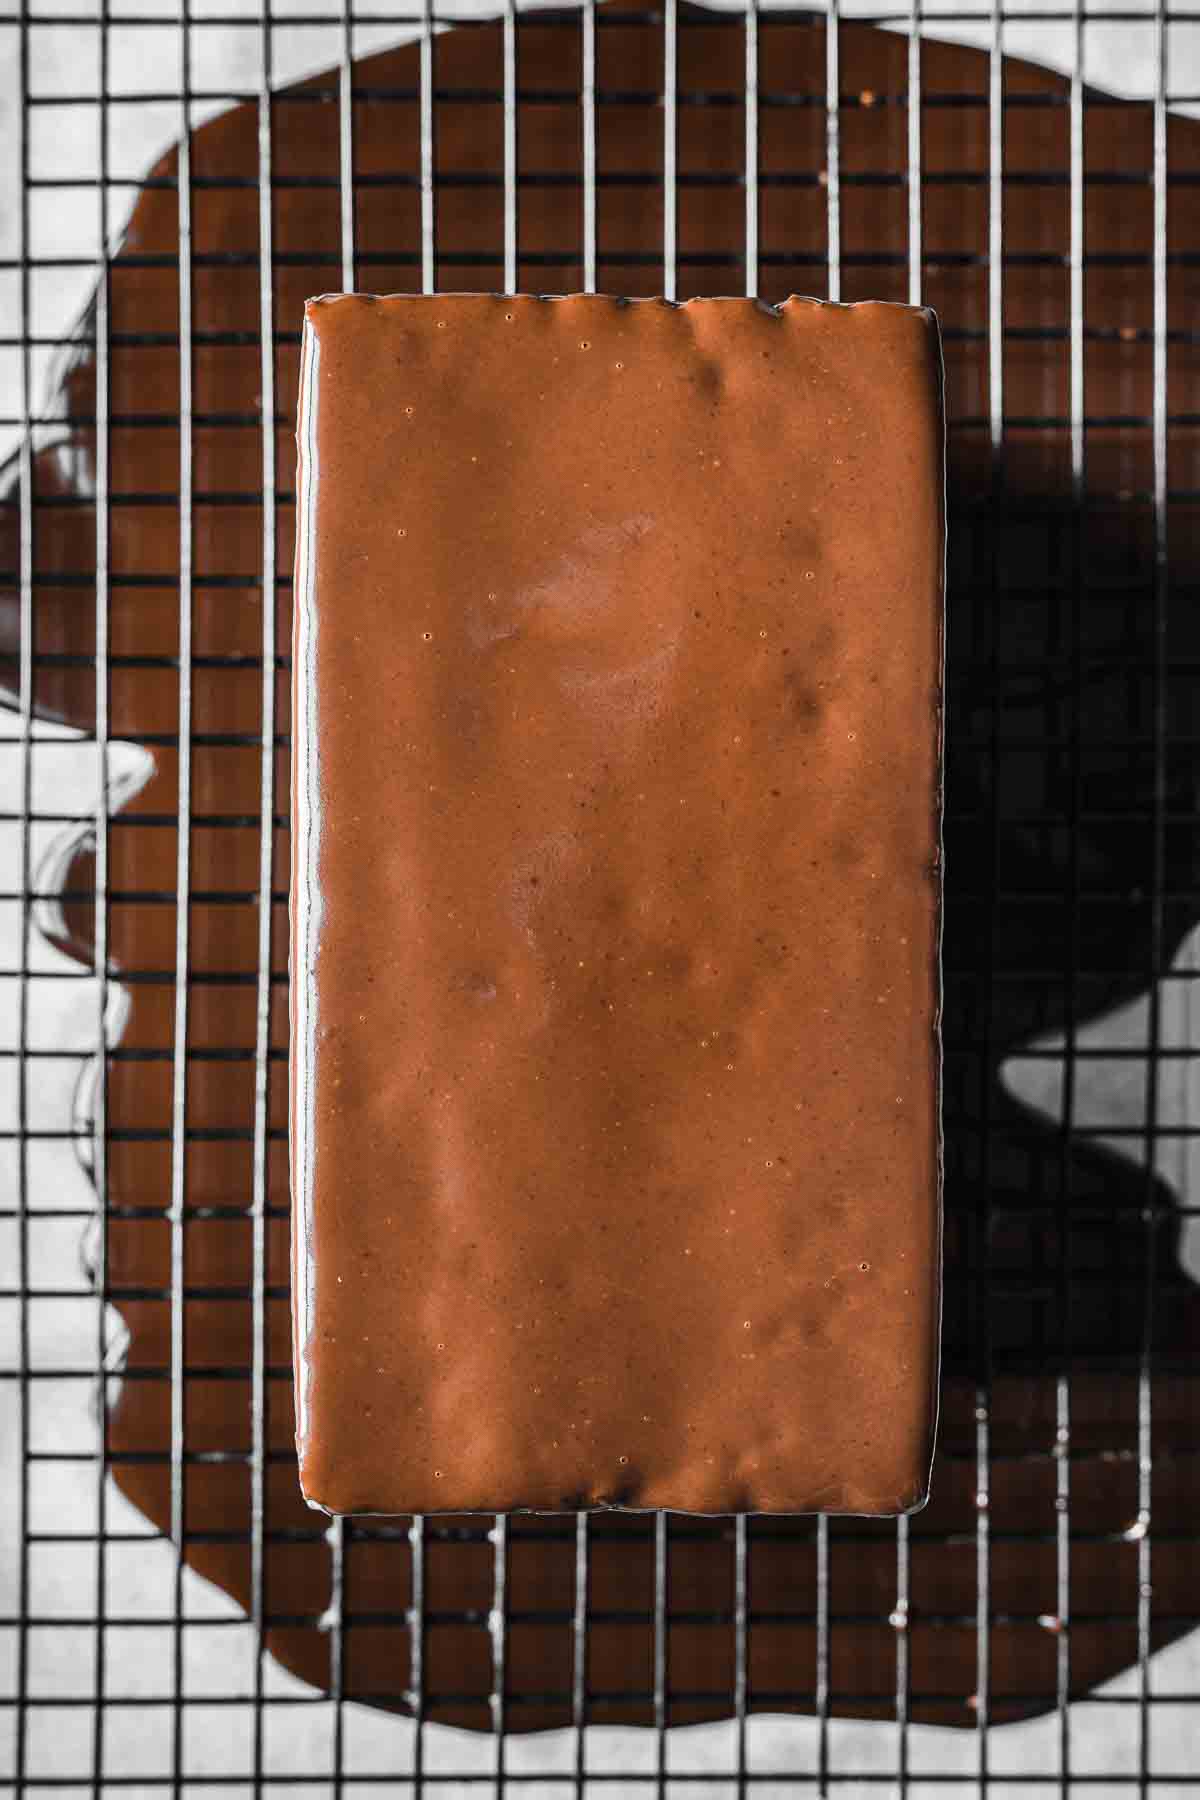 A loaf cake glazed with chocolate ganache.